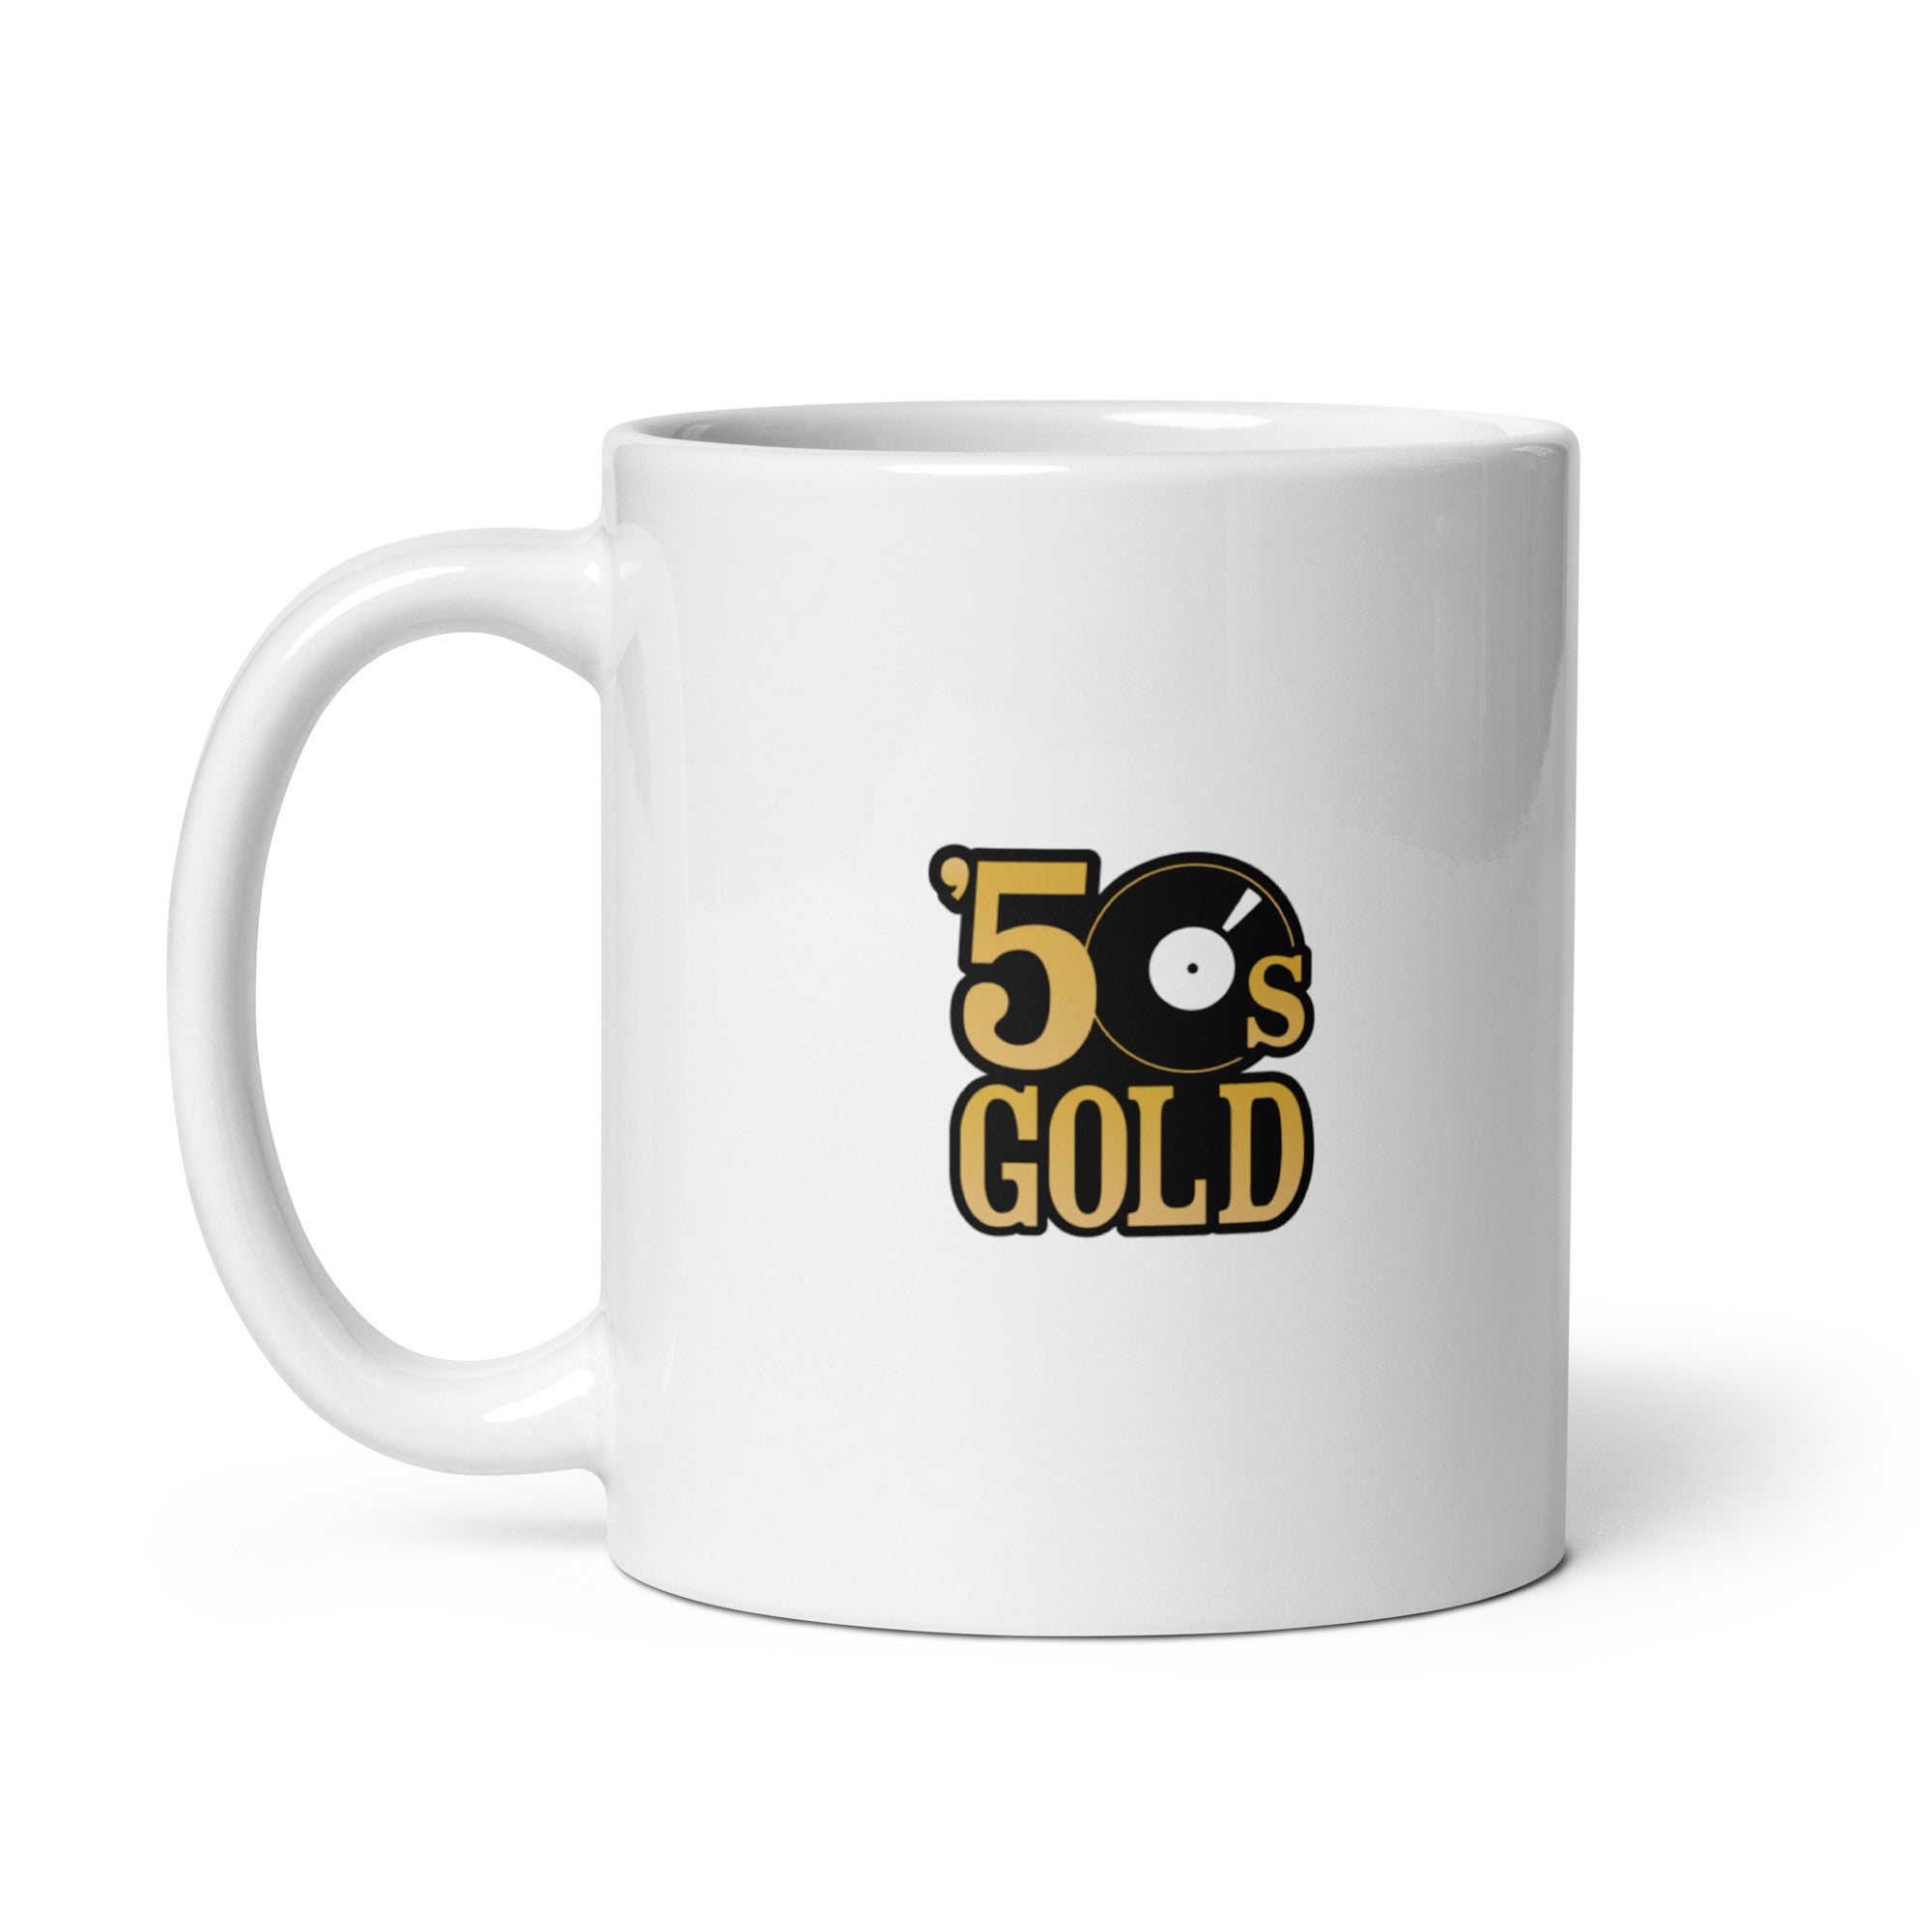 50s Gold: Mug